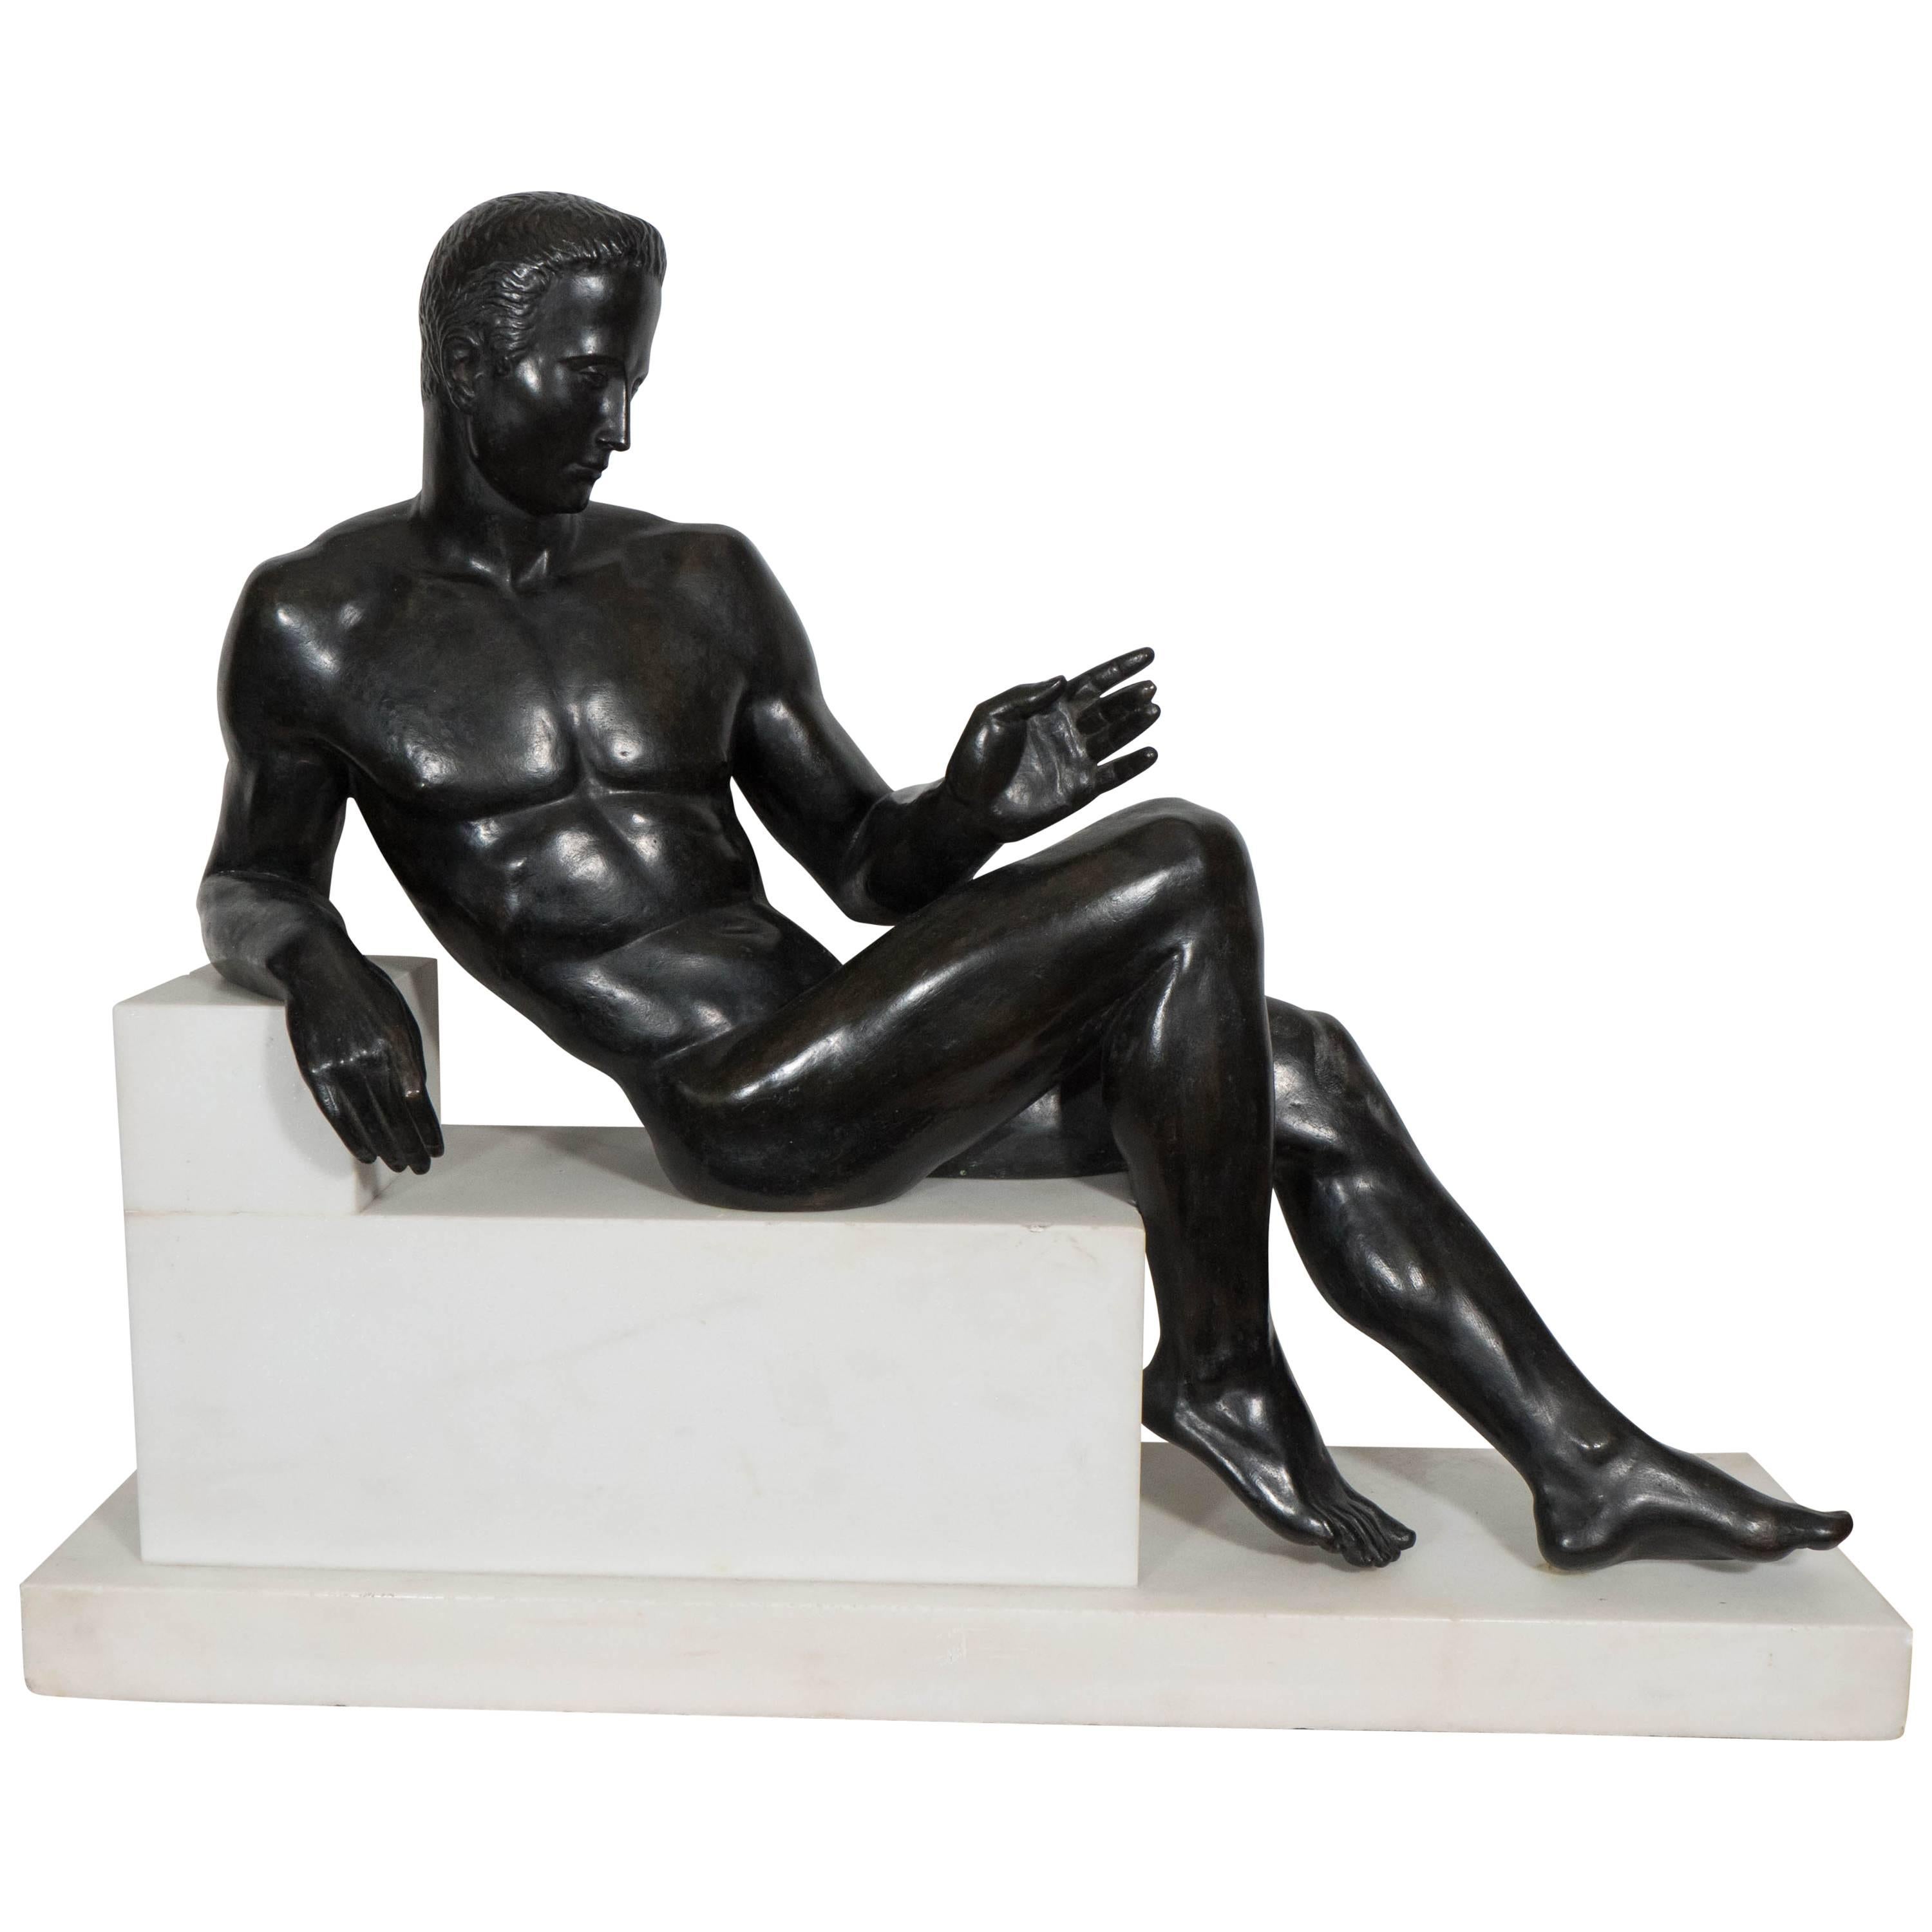 Sculpture de nu masculin de style néoclassique italien en bronze patiné